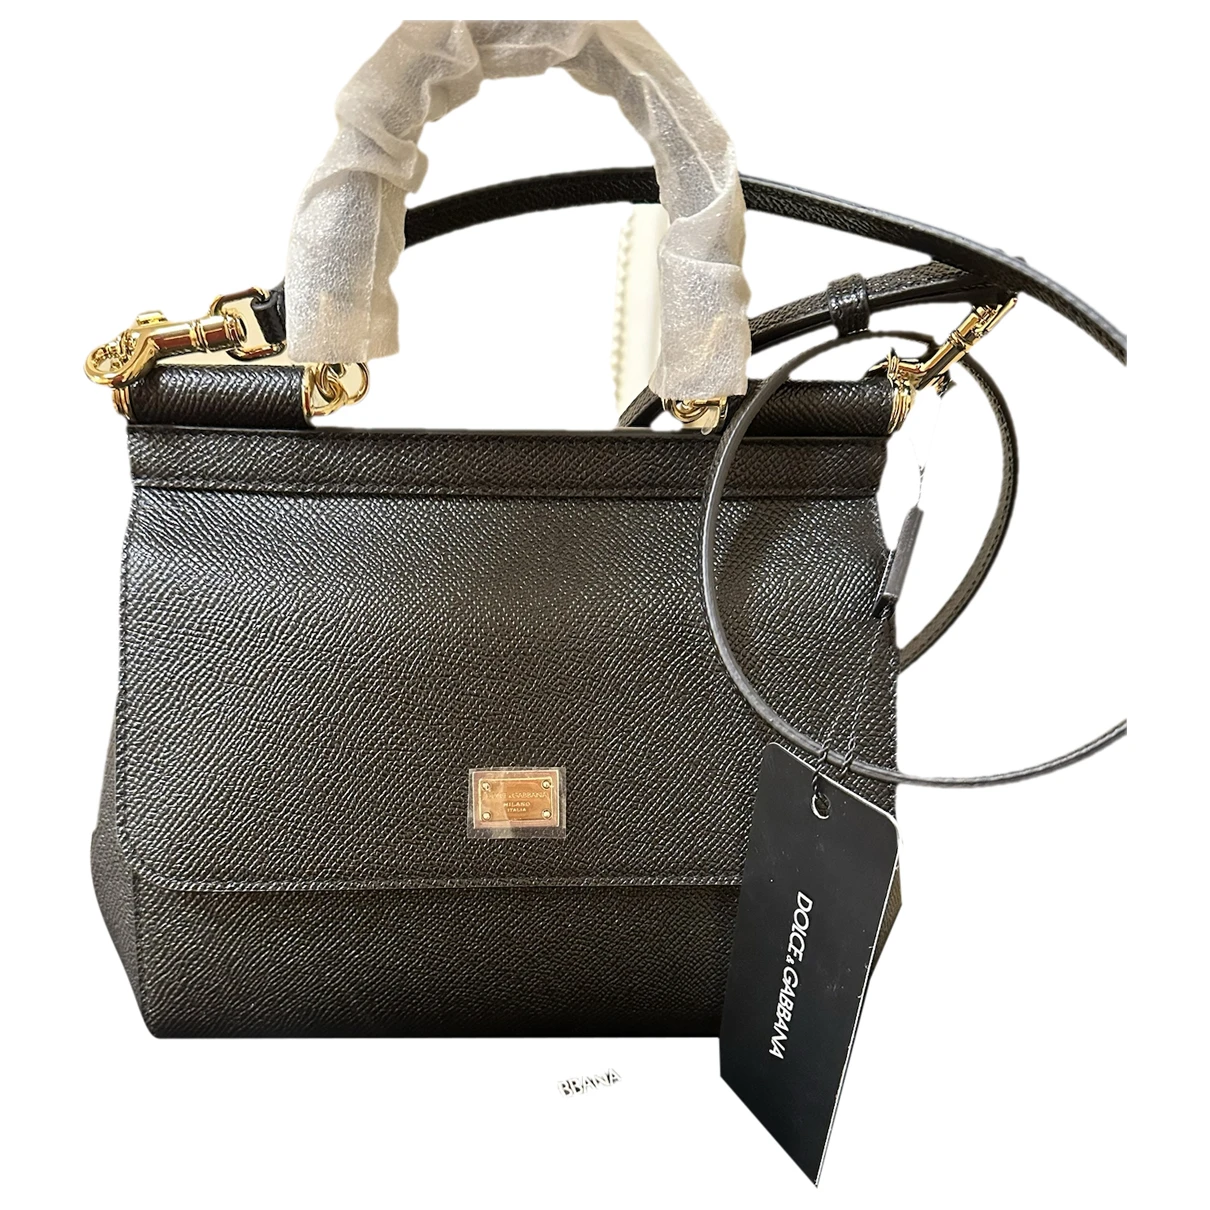 Pre-owned Dolce & Gabbana Sicily Leather Handbag In Black